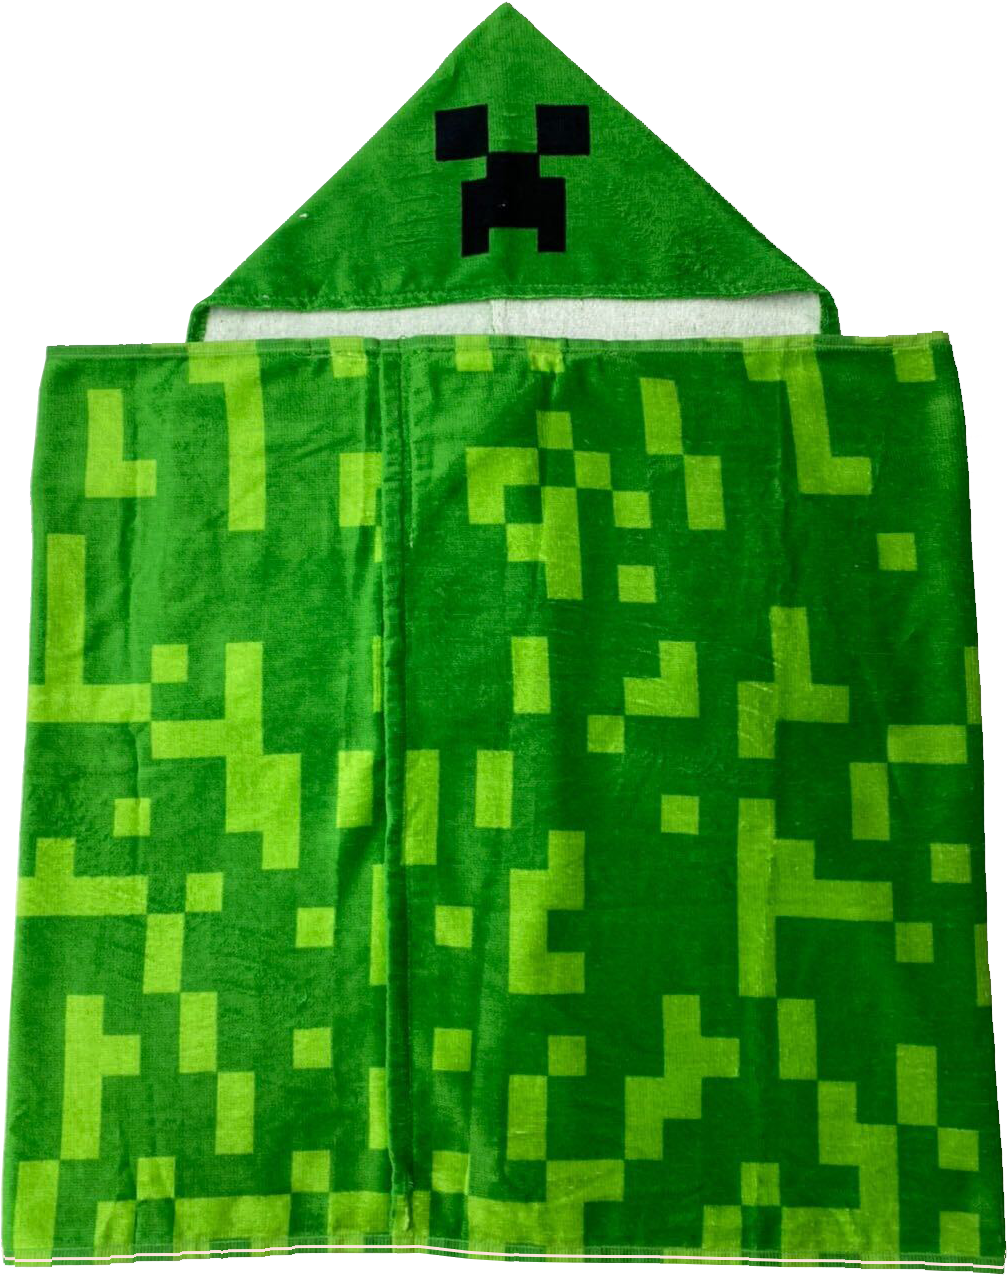 『Minecraft』のグッズ詰め合わせ「ミステリーボックス」第4弾とエコバッグに入った「オリジナルバリューパック」が7月23日より限定発売_003